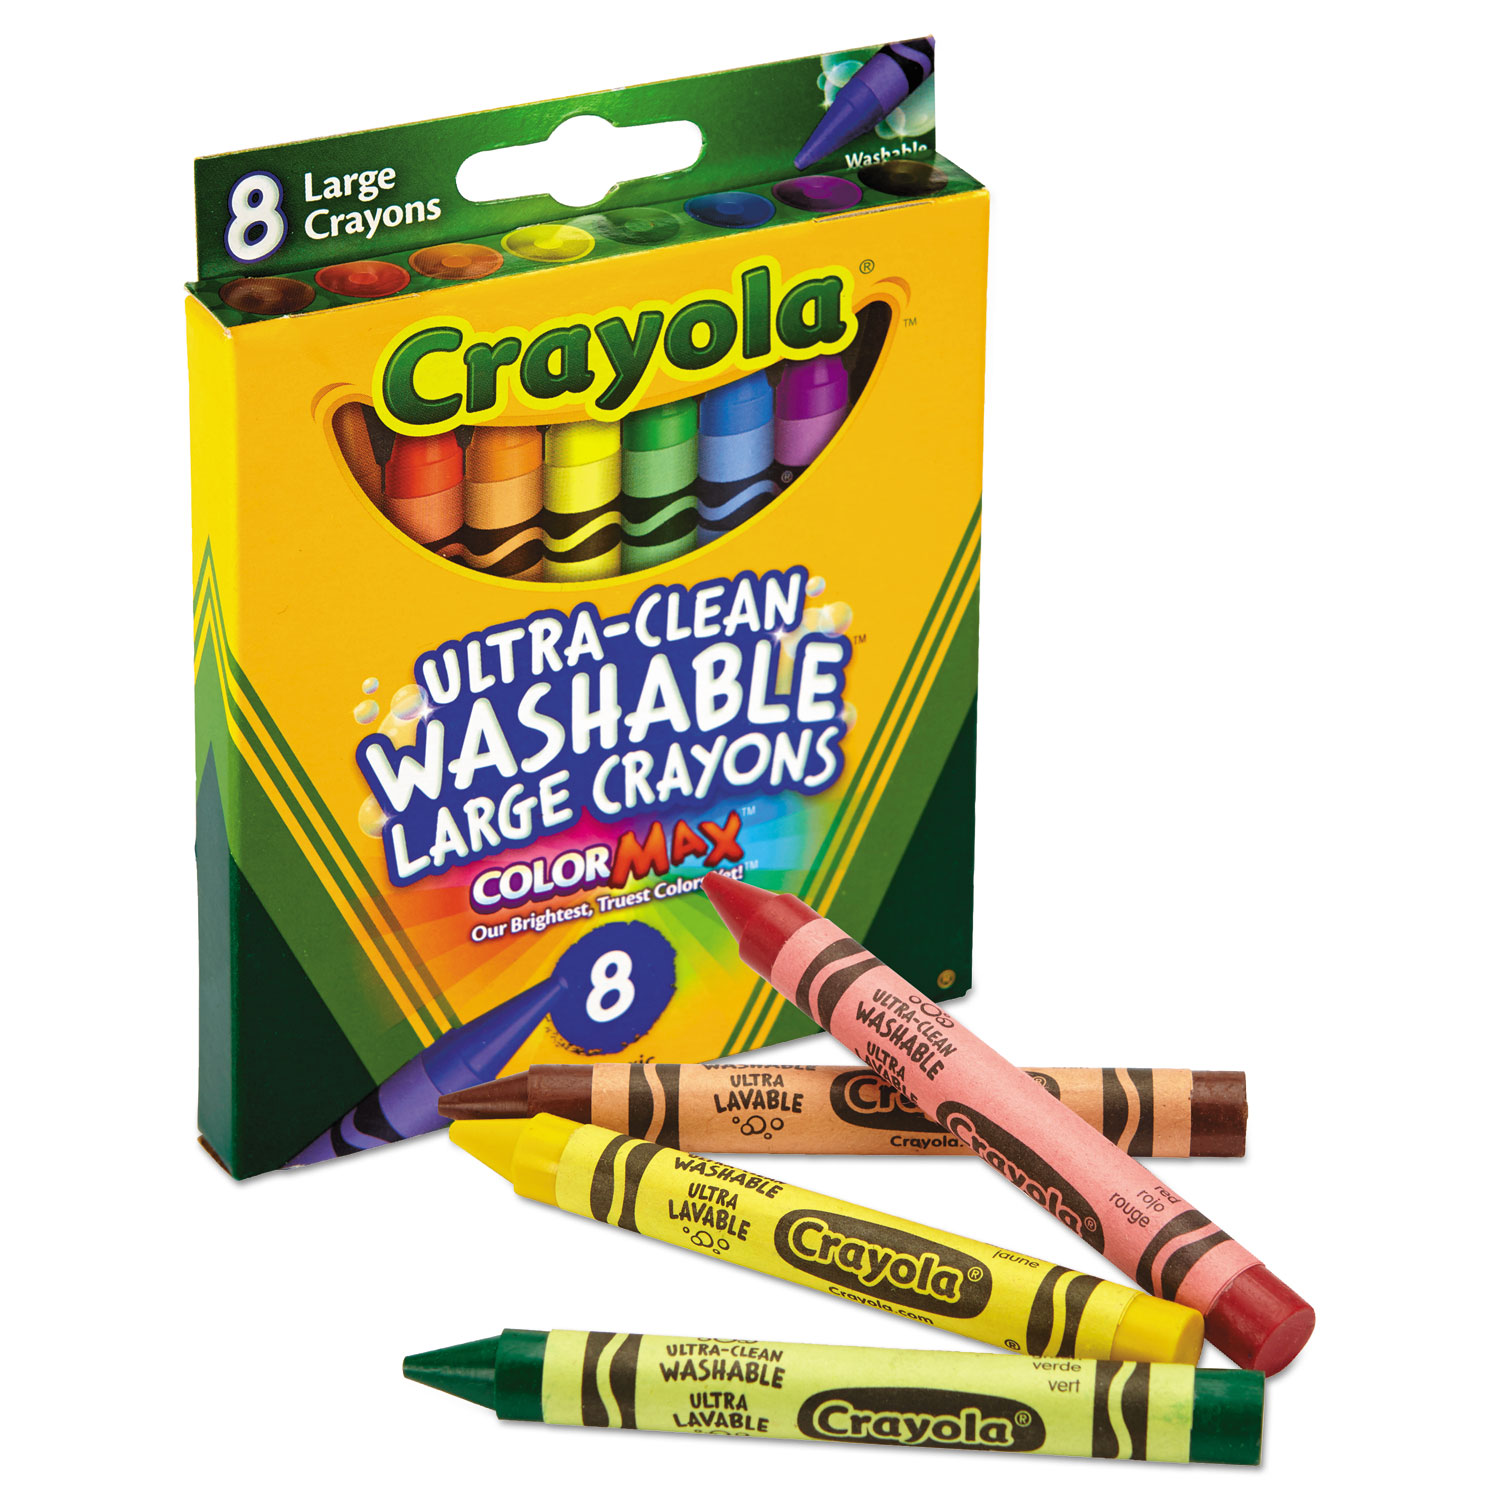 Ultra-Clean Washable Crayons, Large, 8 Colors/Box - mastersupplyonline